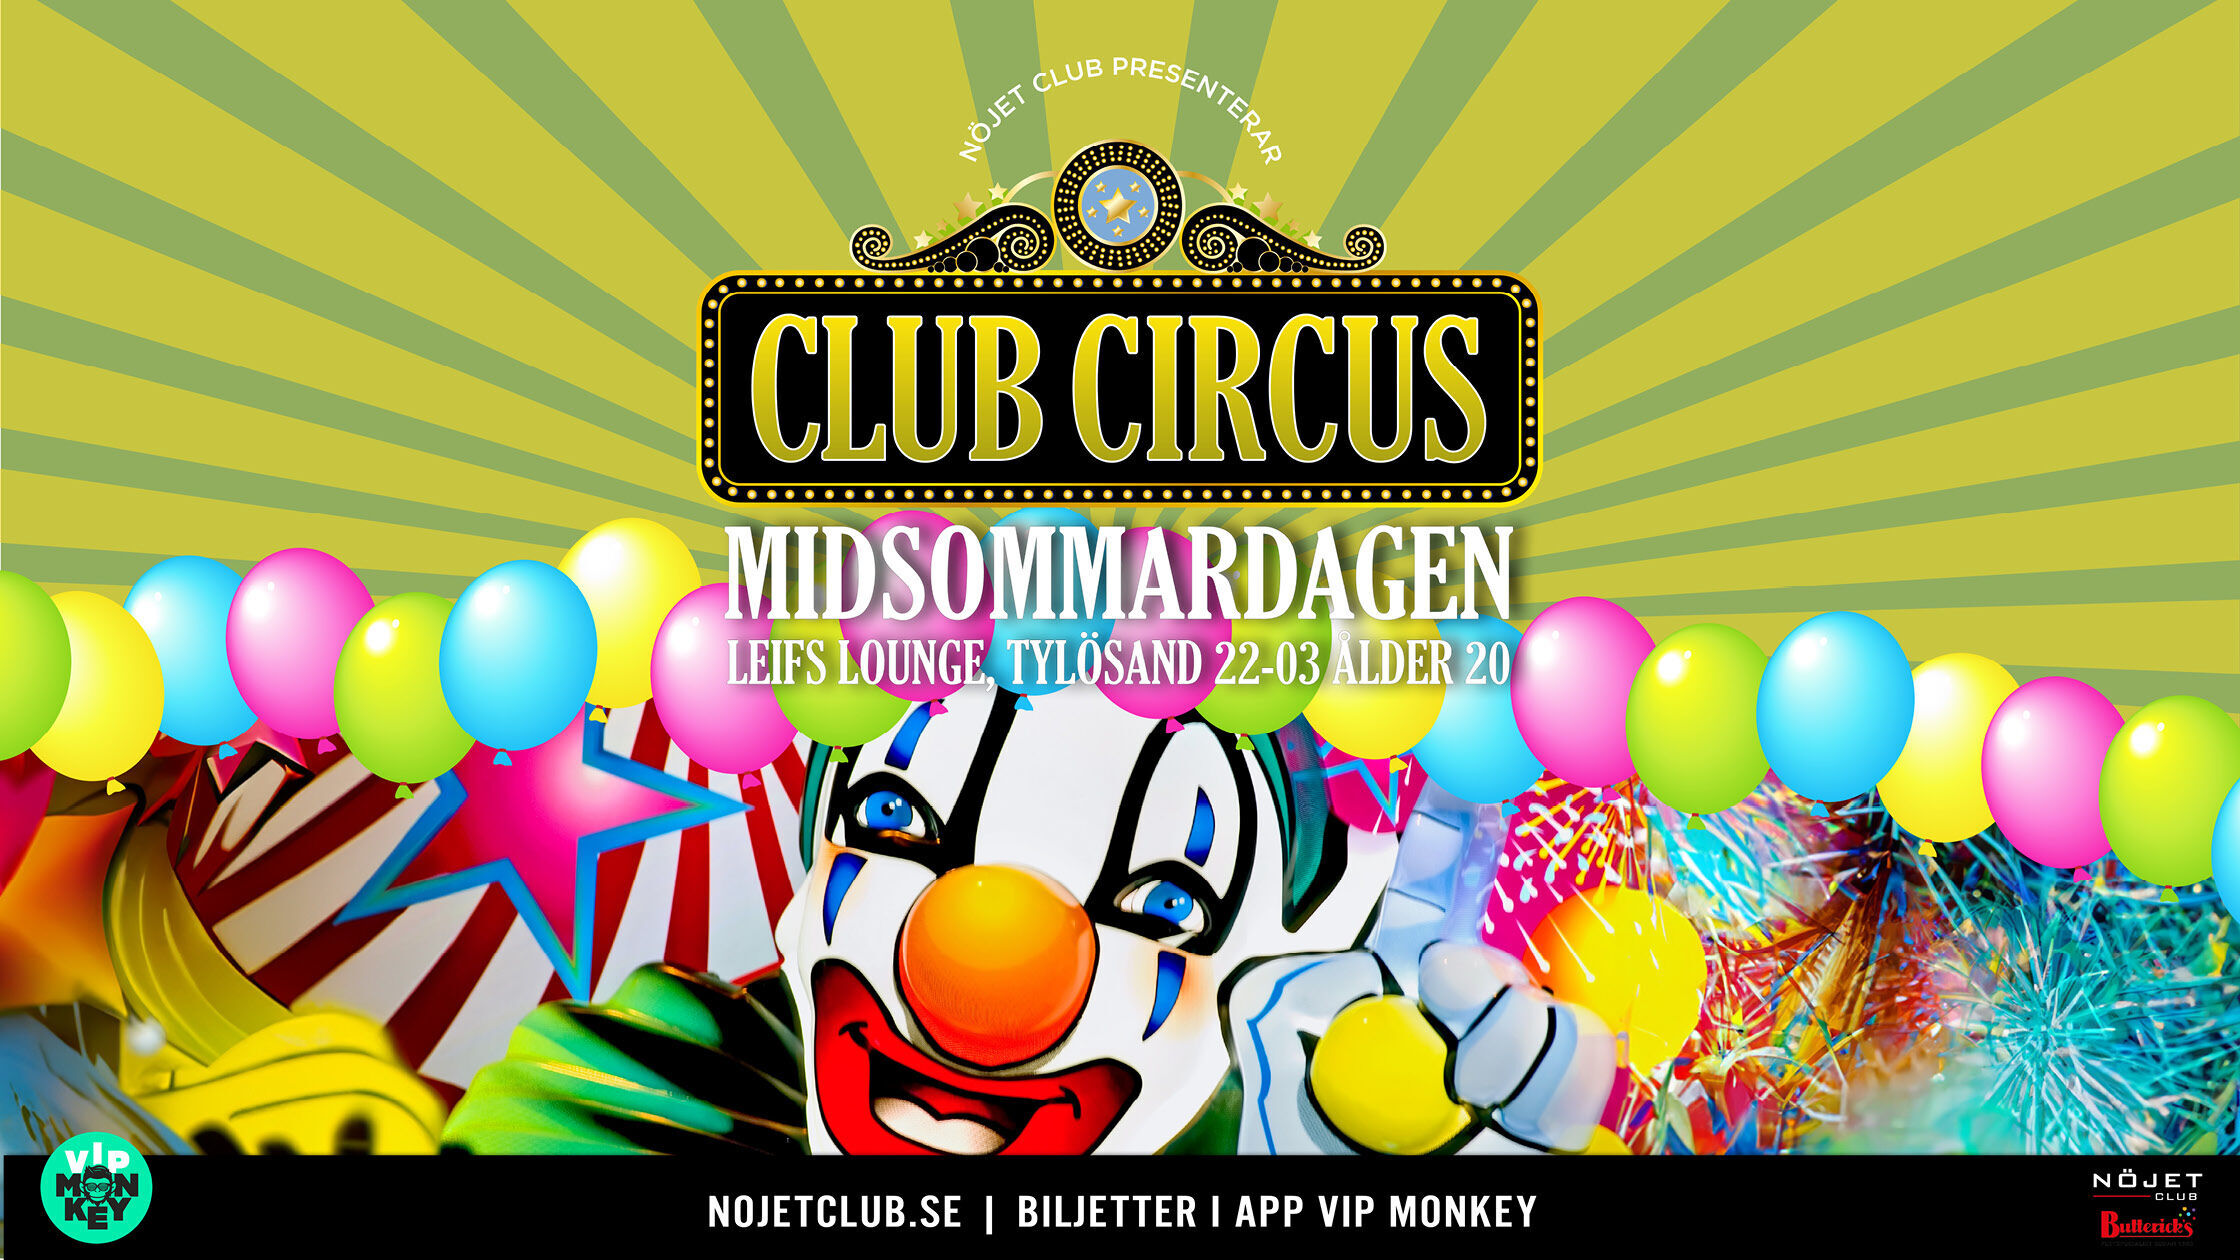 Club Circus Midsommardagen